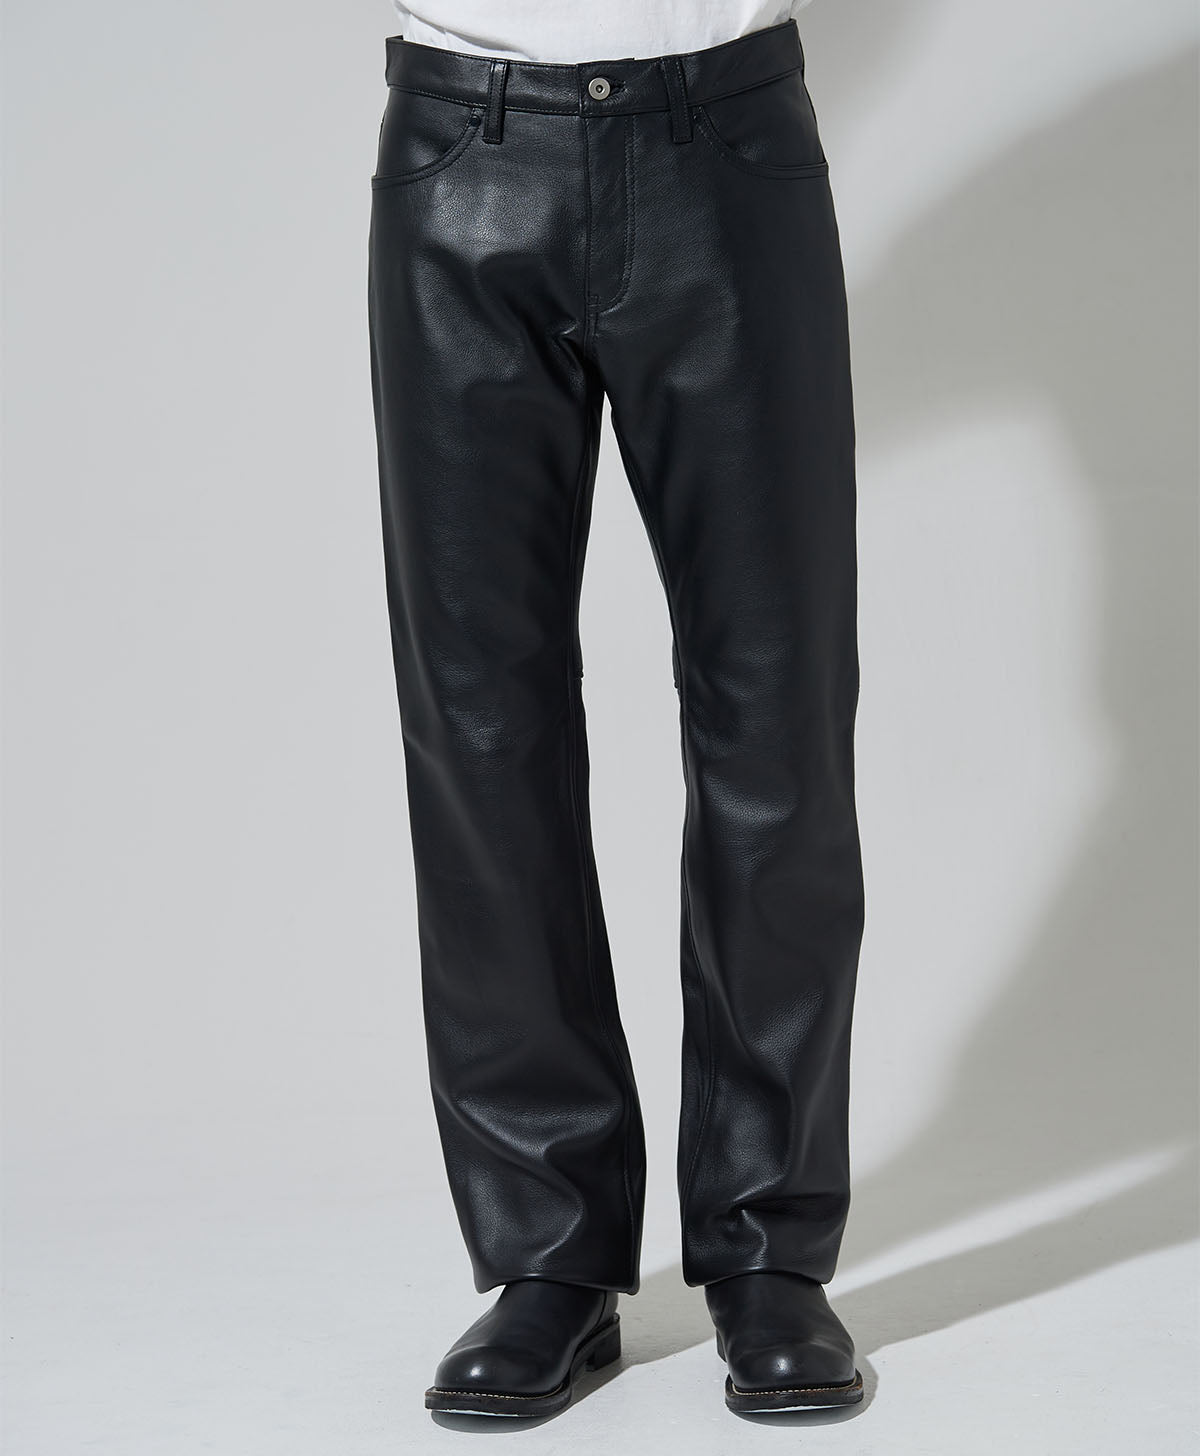 Lrx-pants / black